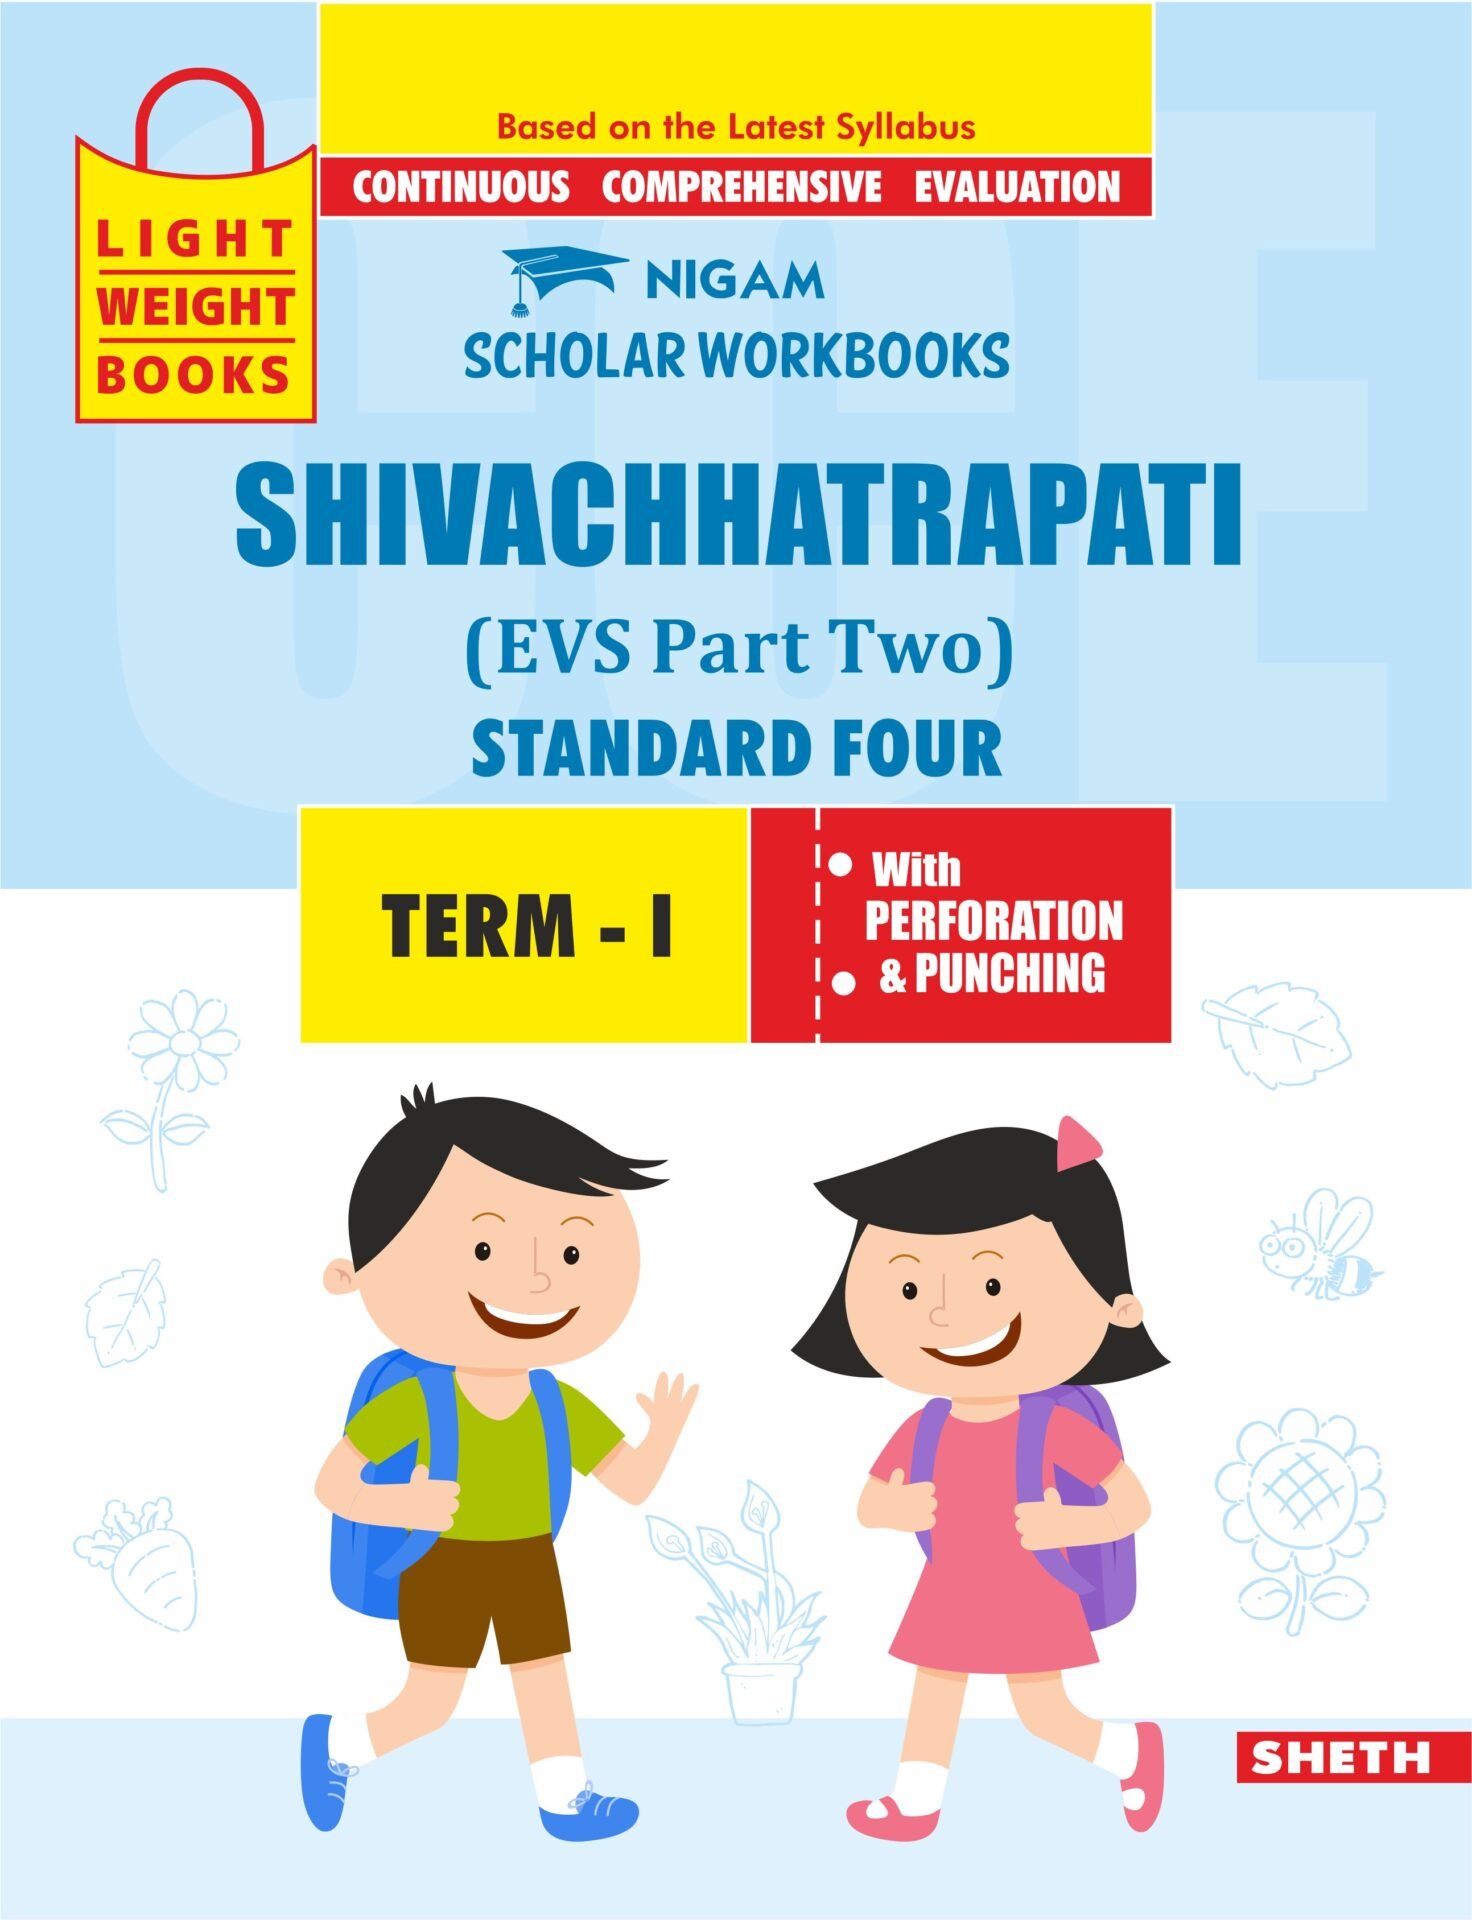 CCE Pattern Nigam Scholar Workbooks Shivachhatrapati EVS Part Two Standard 4 Term 1 1